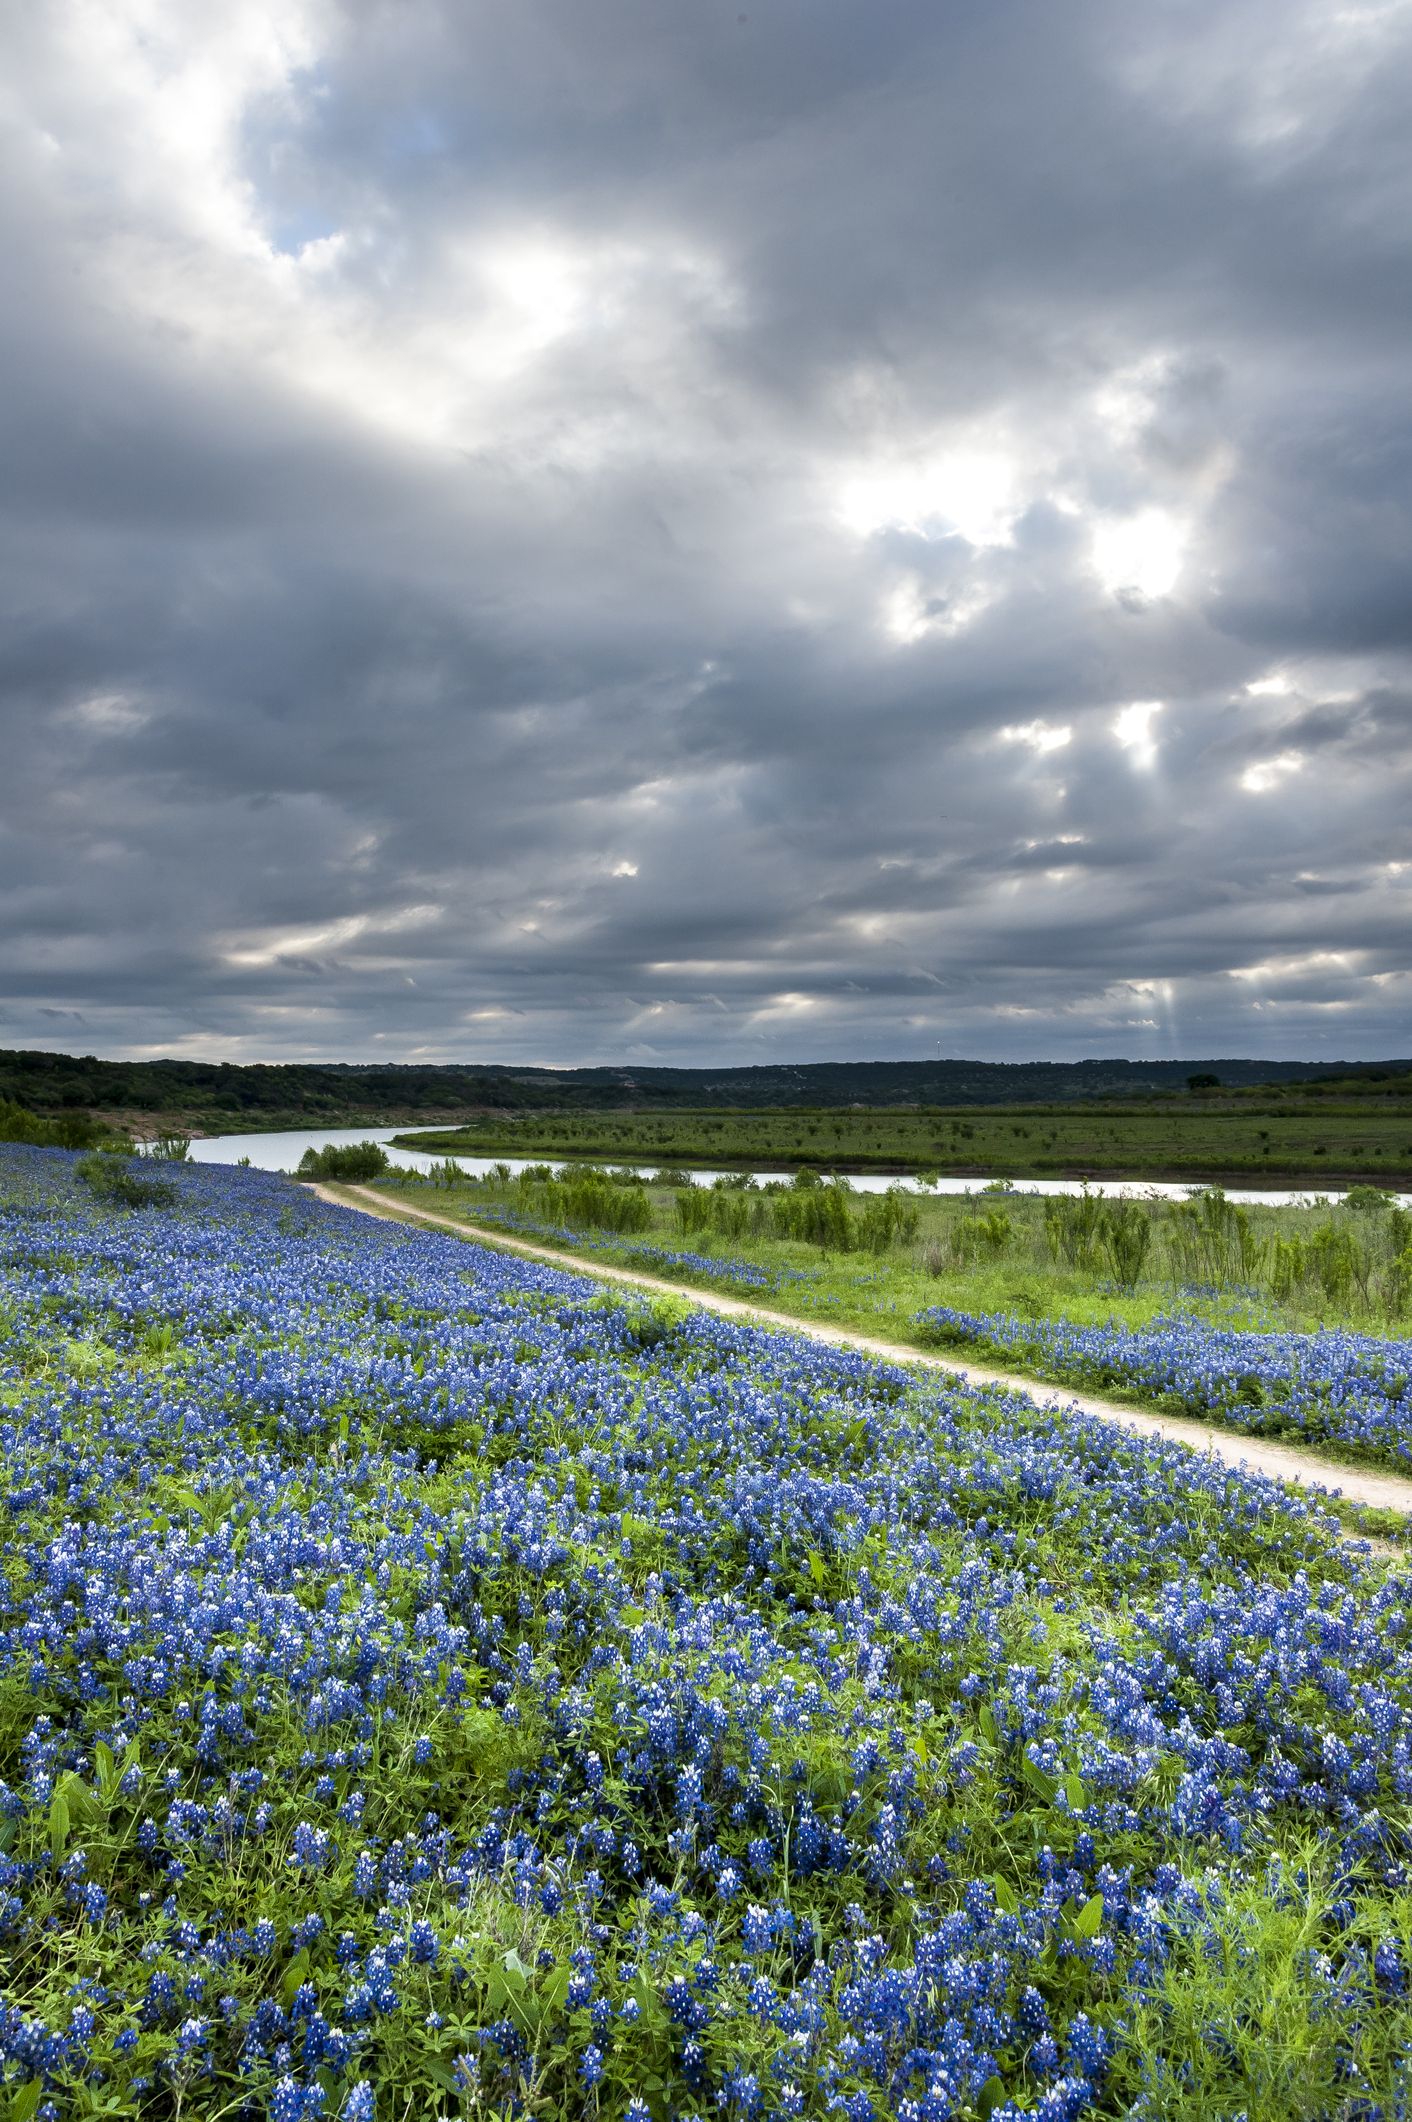 https://hips.hearstapps.com/hmg-prod.s3.amazonaws.com/images/field-of-texas-bluebonnet-wildflowers-royalty-free-image-1580311943.jpg?crop=1xw:1xh;center,top